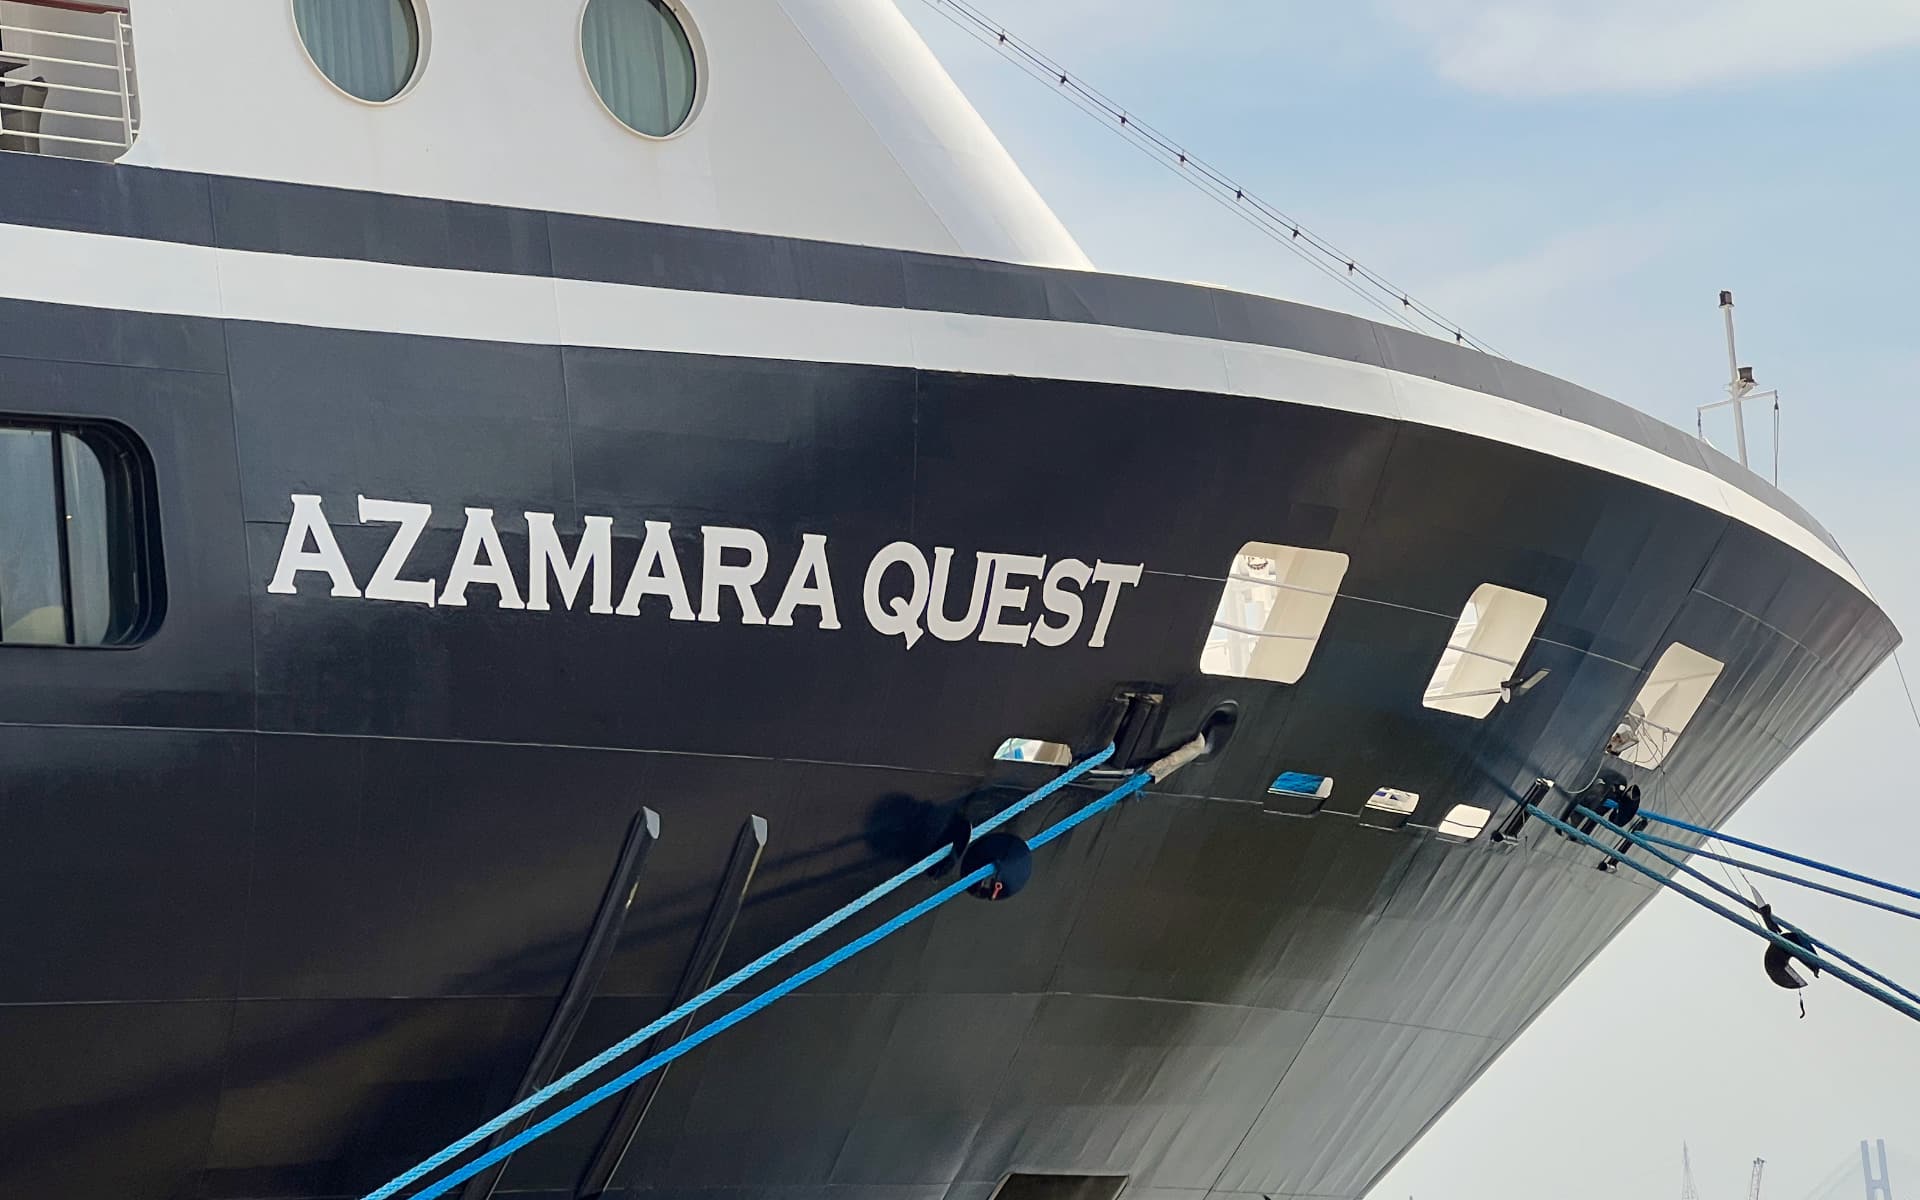 The Azamara Quest cruise ship.